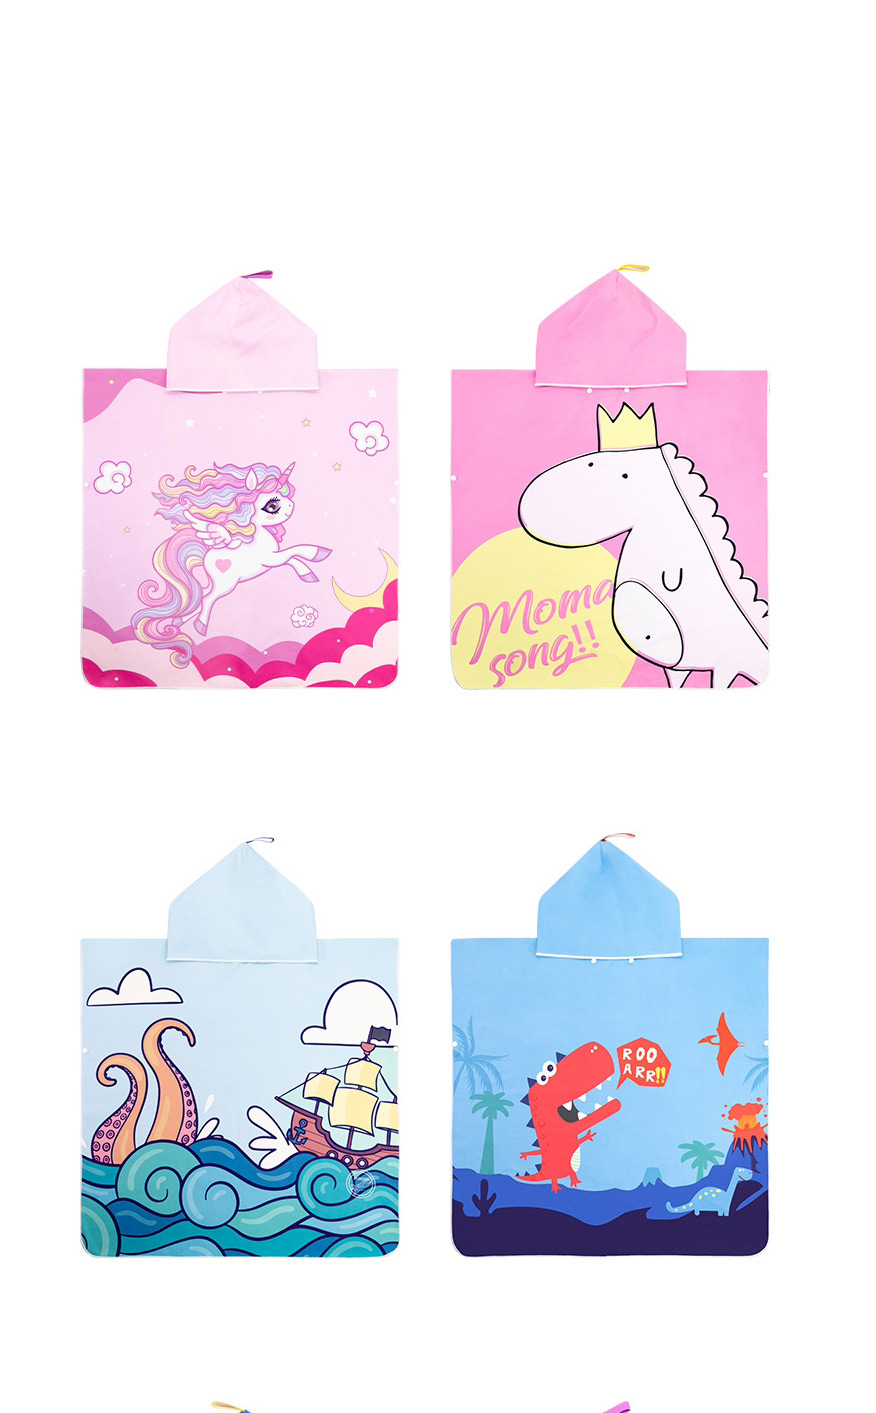 Fashion Polar Bear Microfiber Cartoon Print Childrens Hooded Bath Towel,Kids Swimwear